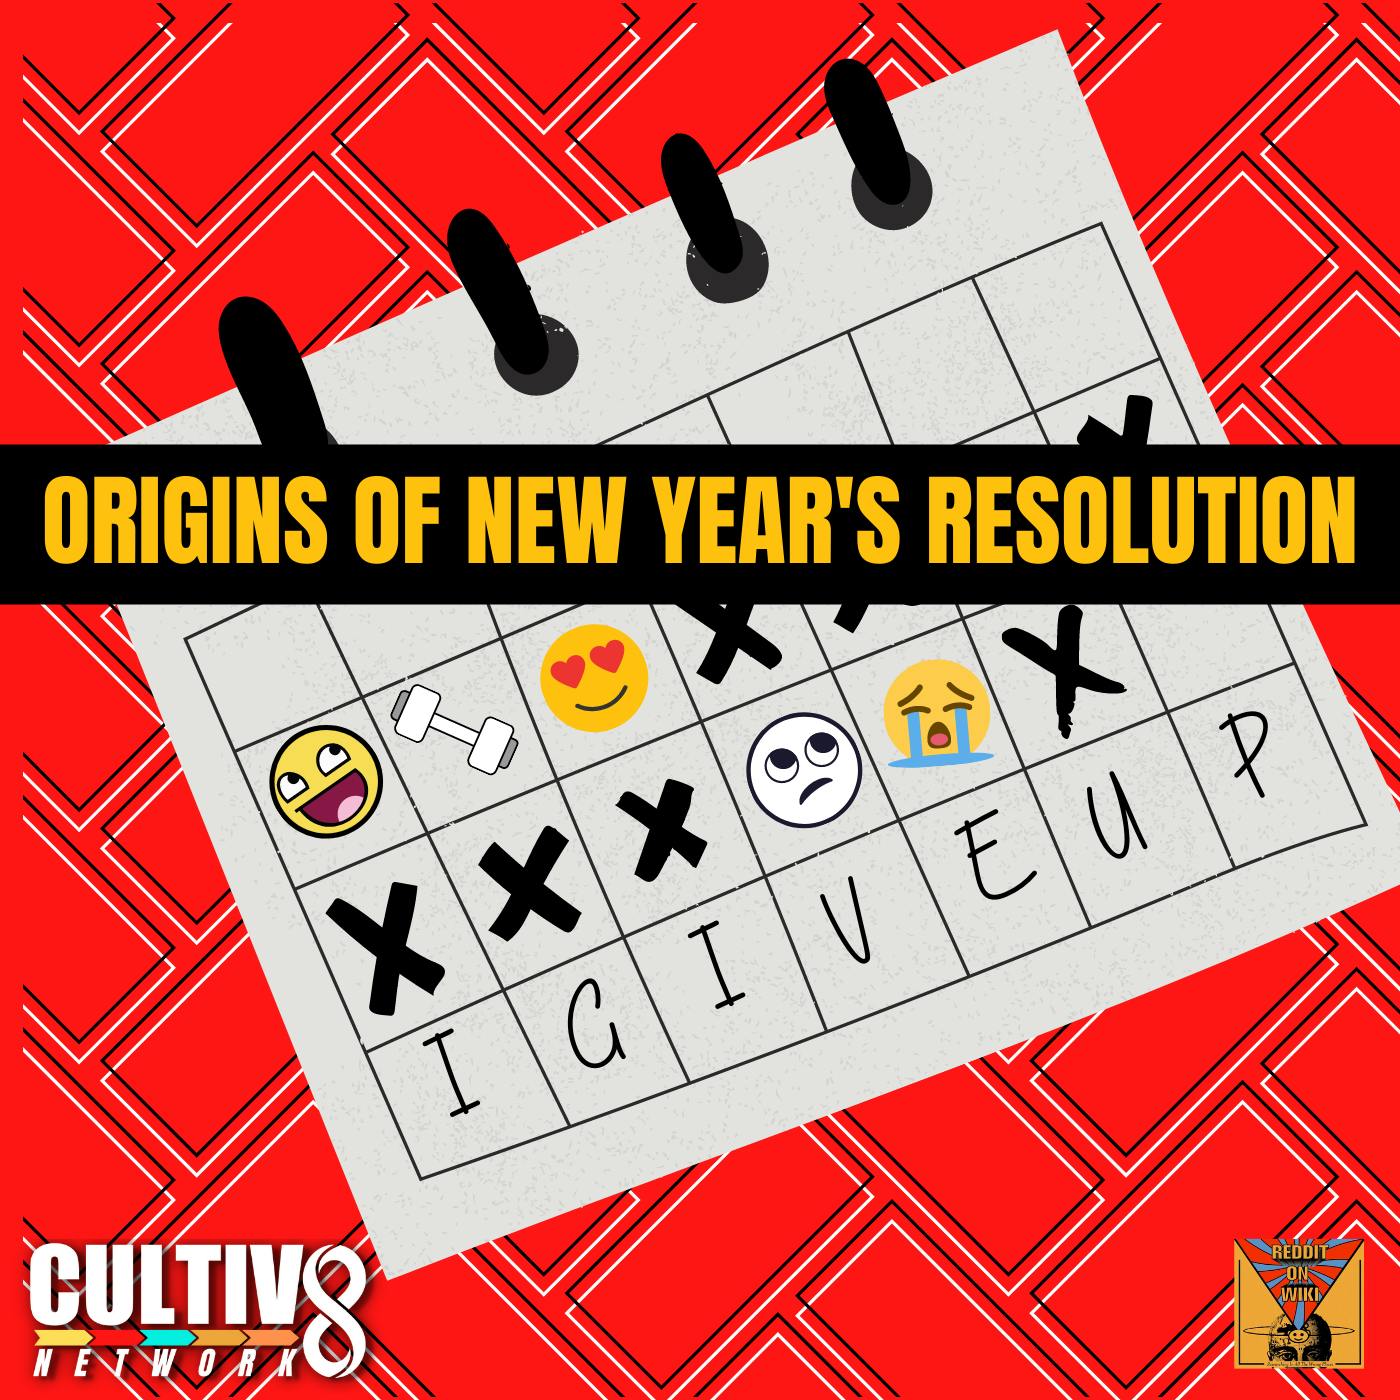 Origins of New Year's Resolution